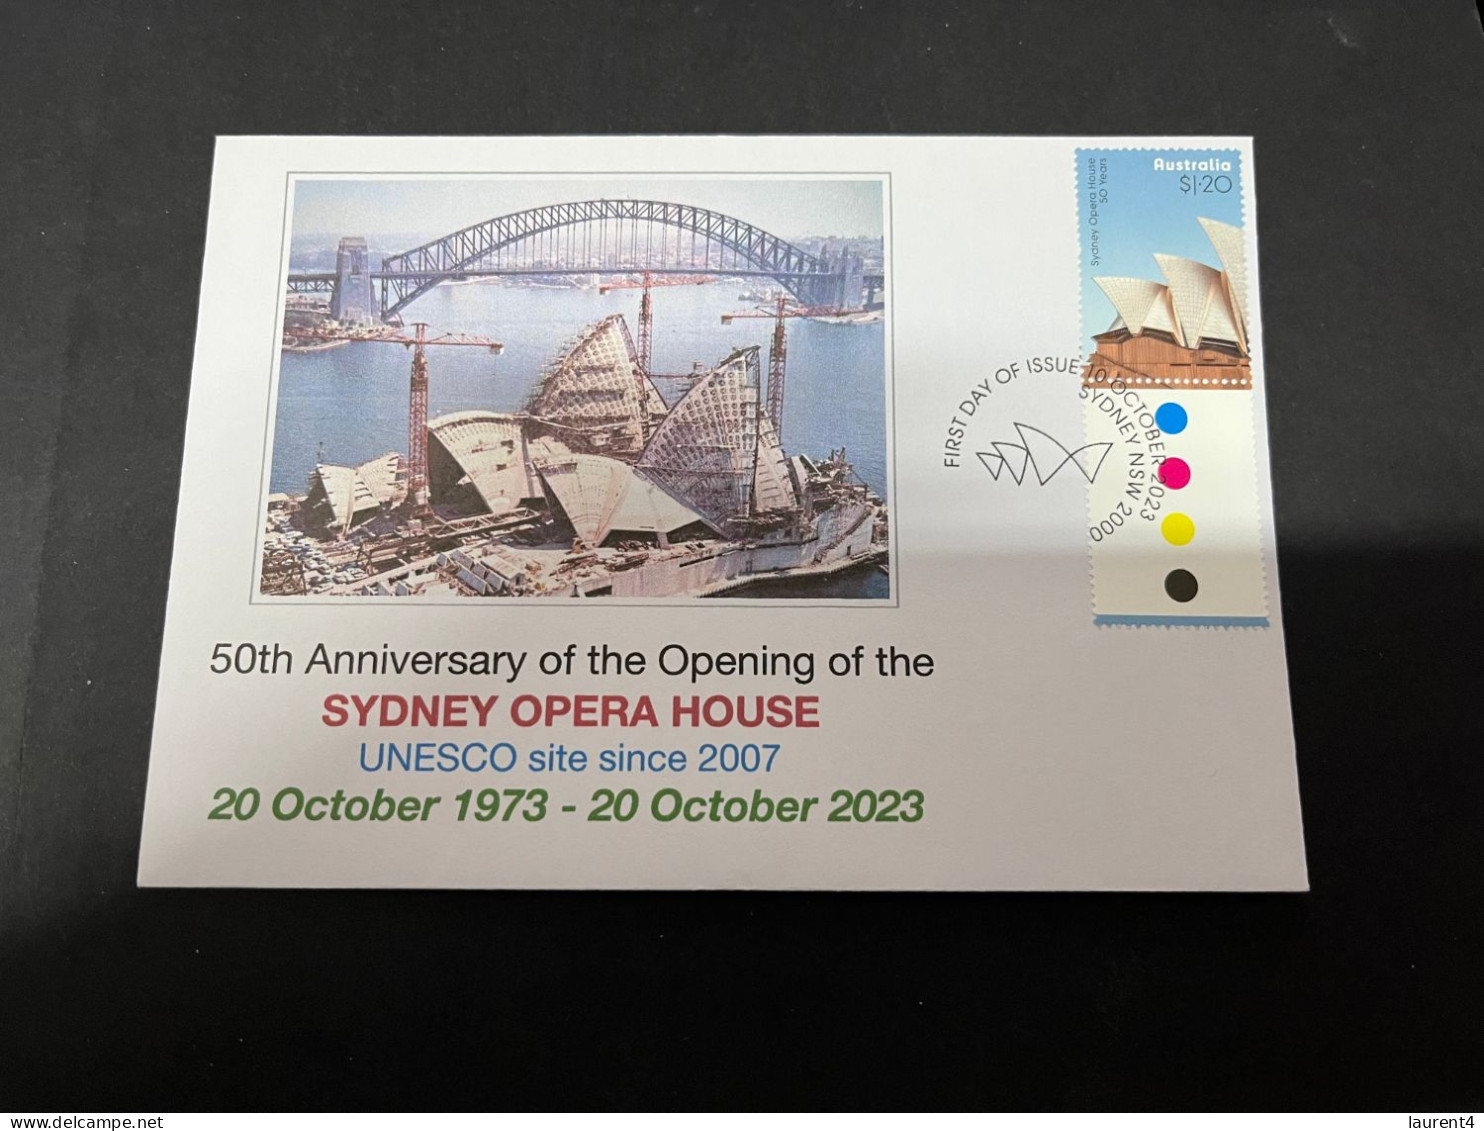 20-10-2023 (4 U 43) Sydney Opera House Celebrate 50th Anniversary (10-10-2023) FDI Cover (under Construction + Bridge) - Covers & Documents